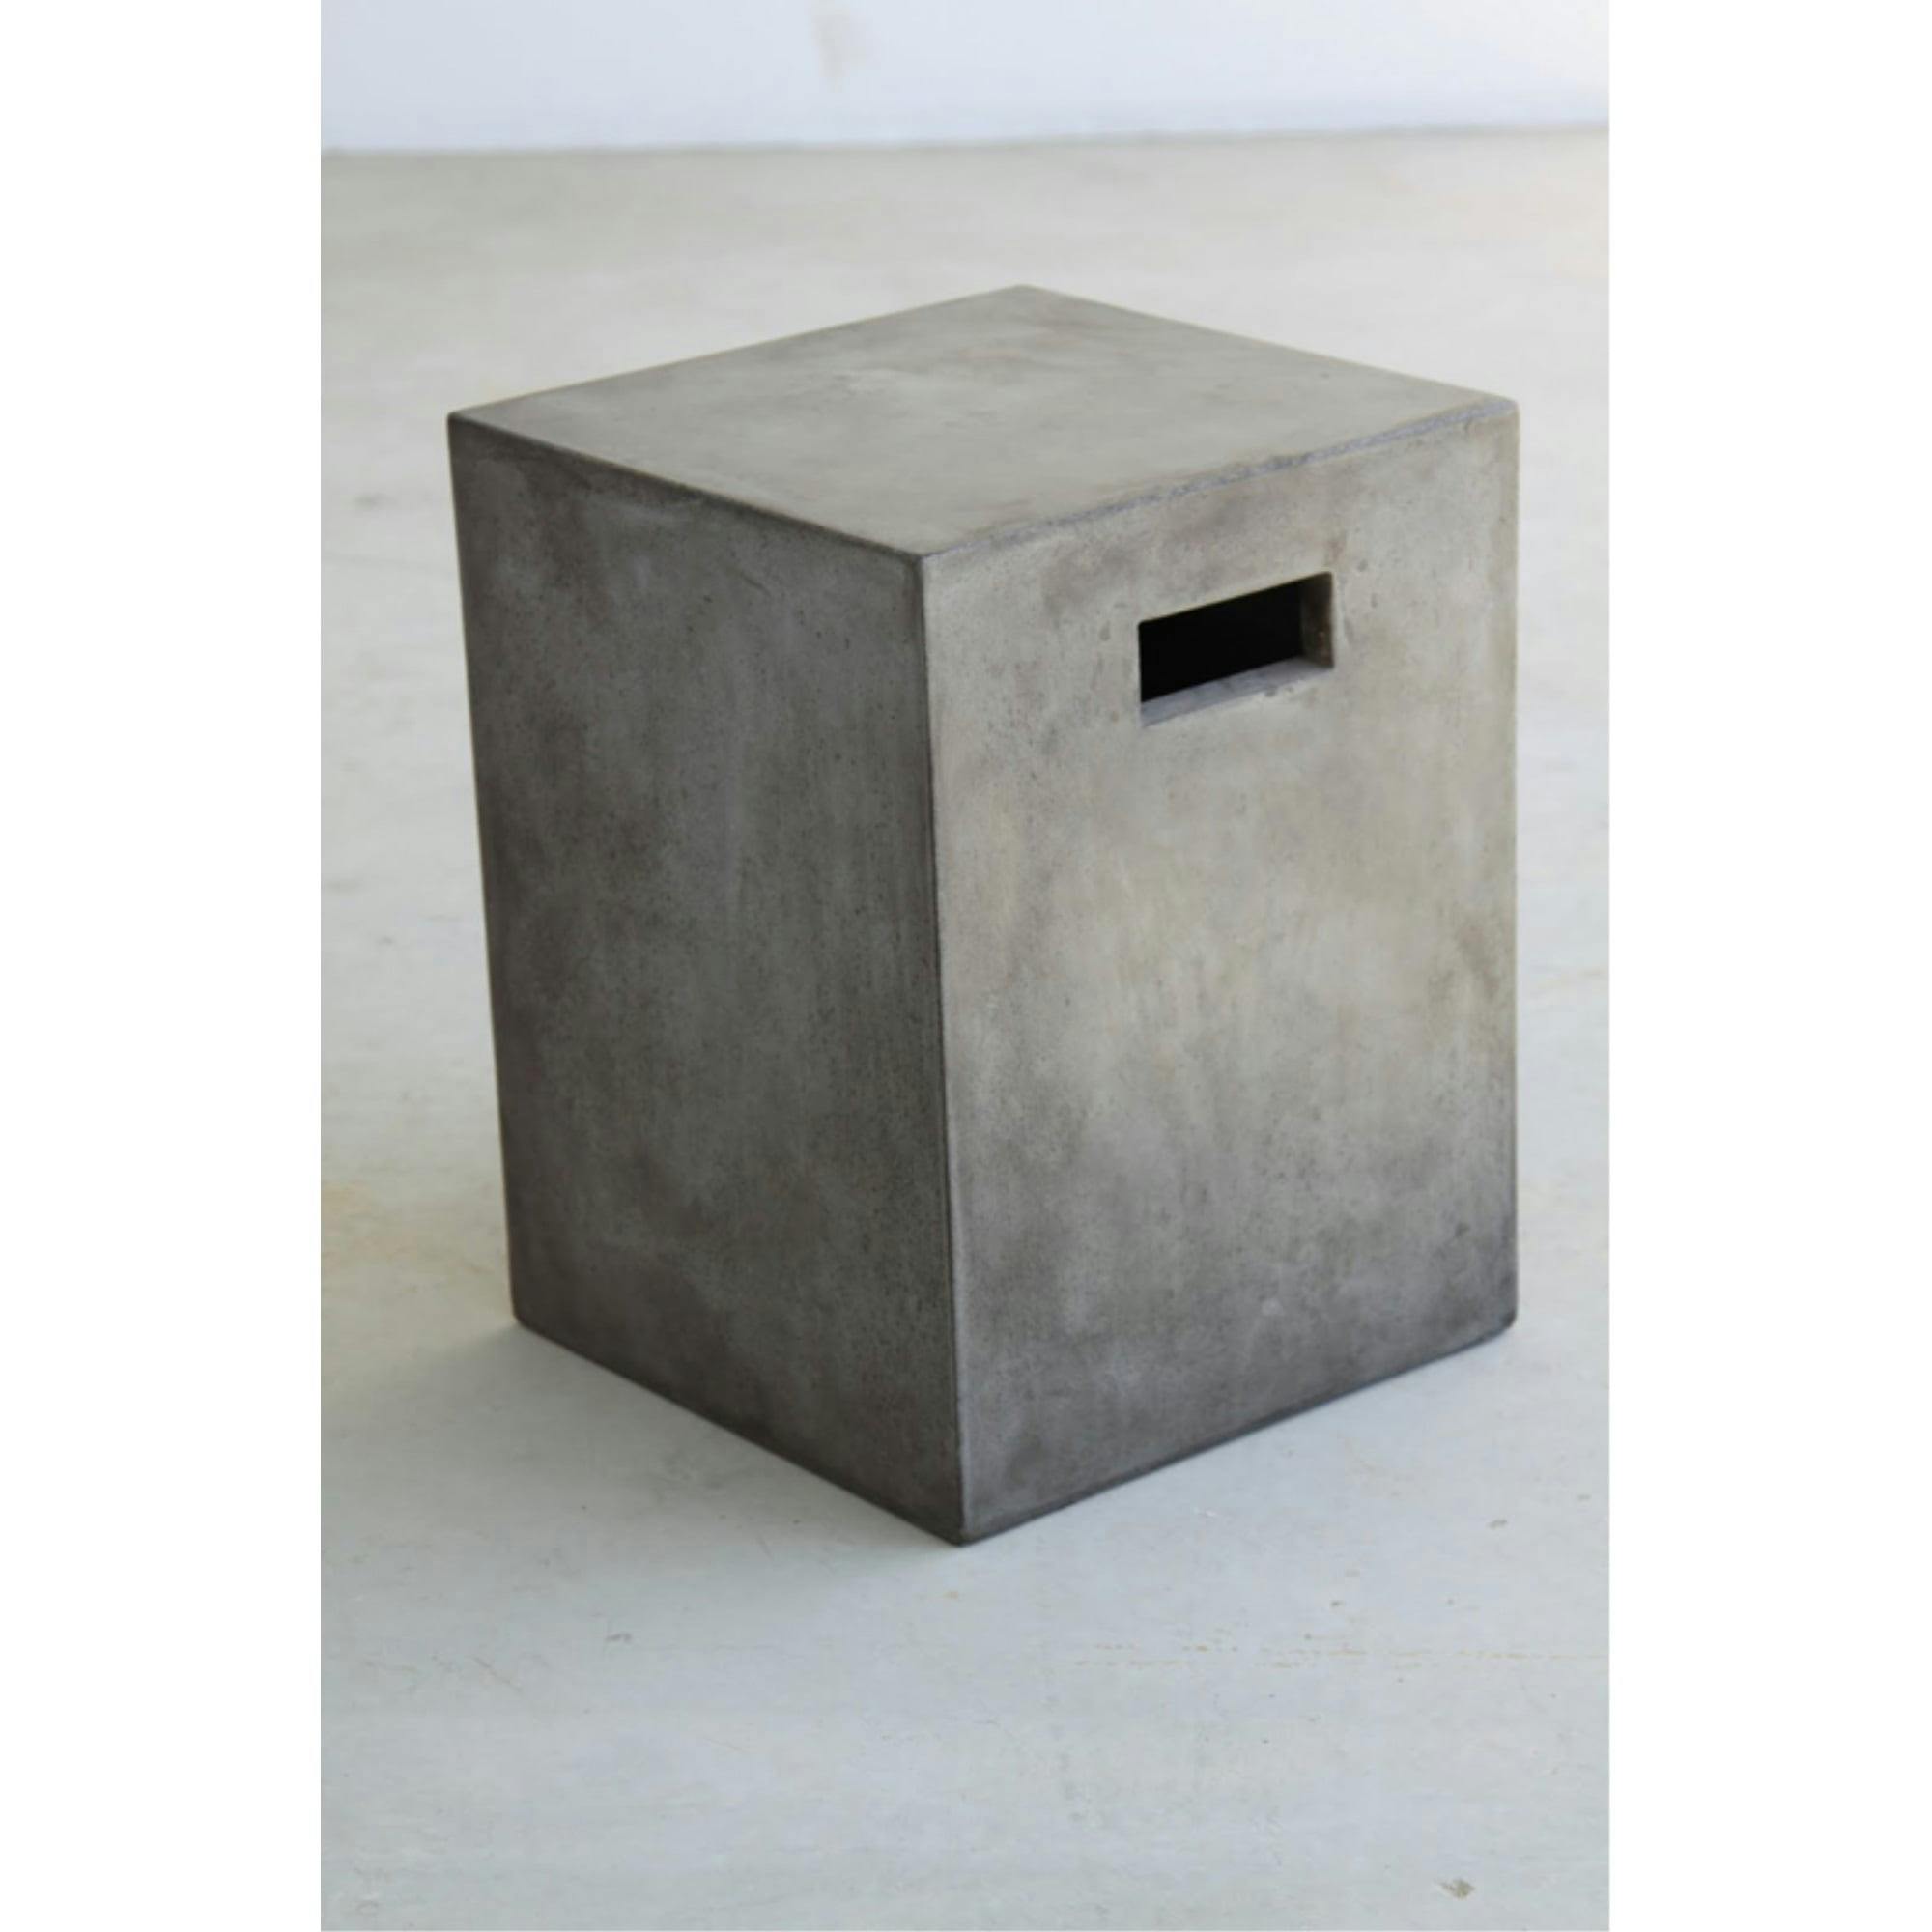 18" Fiber-Reinforced Concrete Dining Stool in Dark Grey